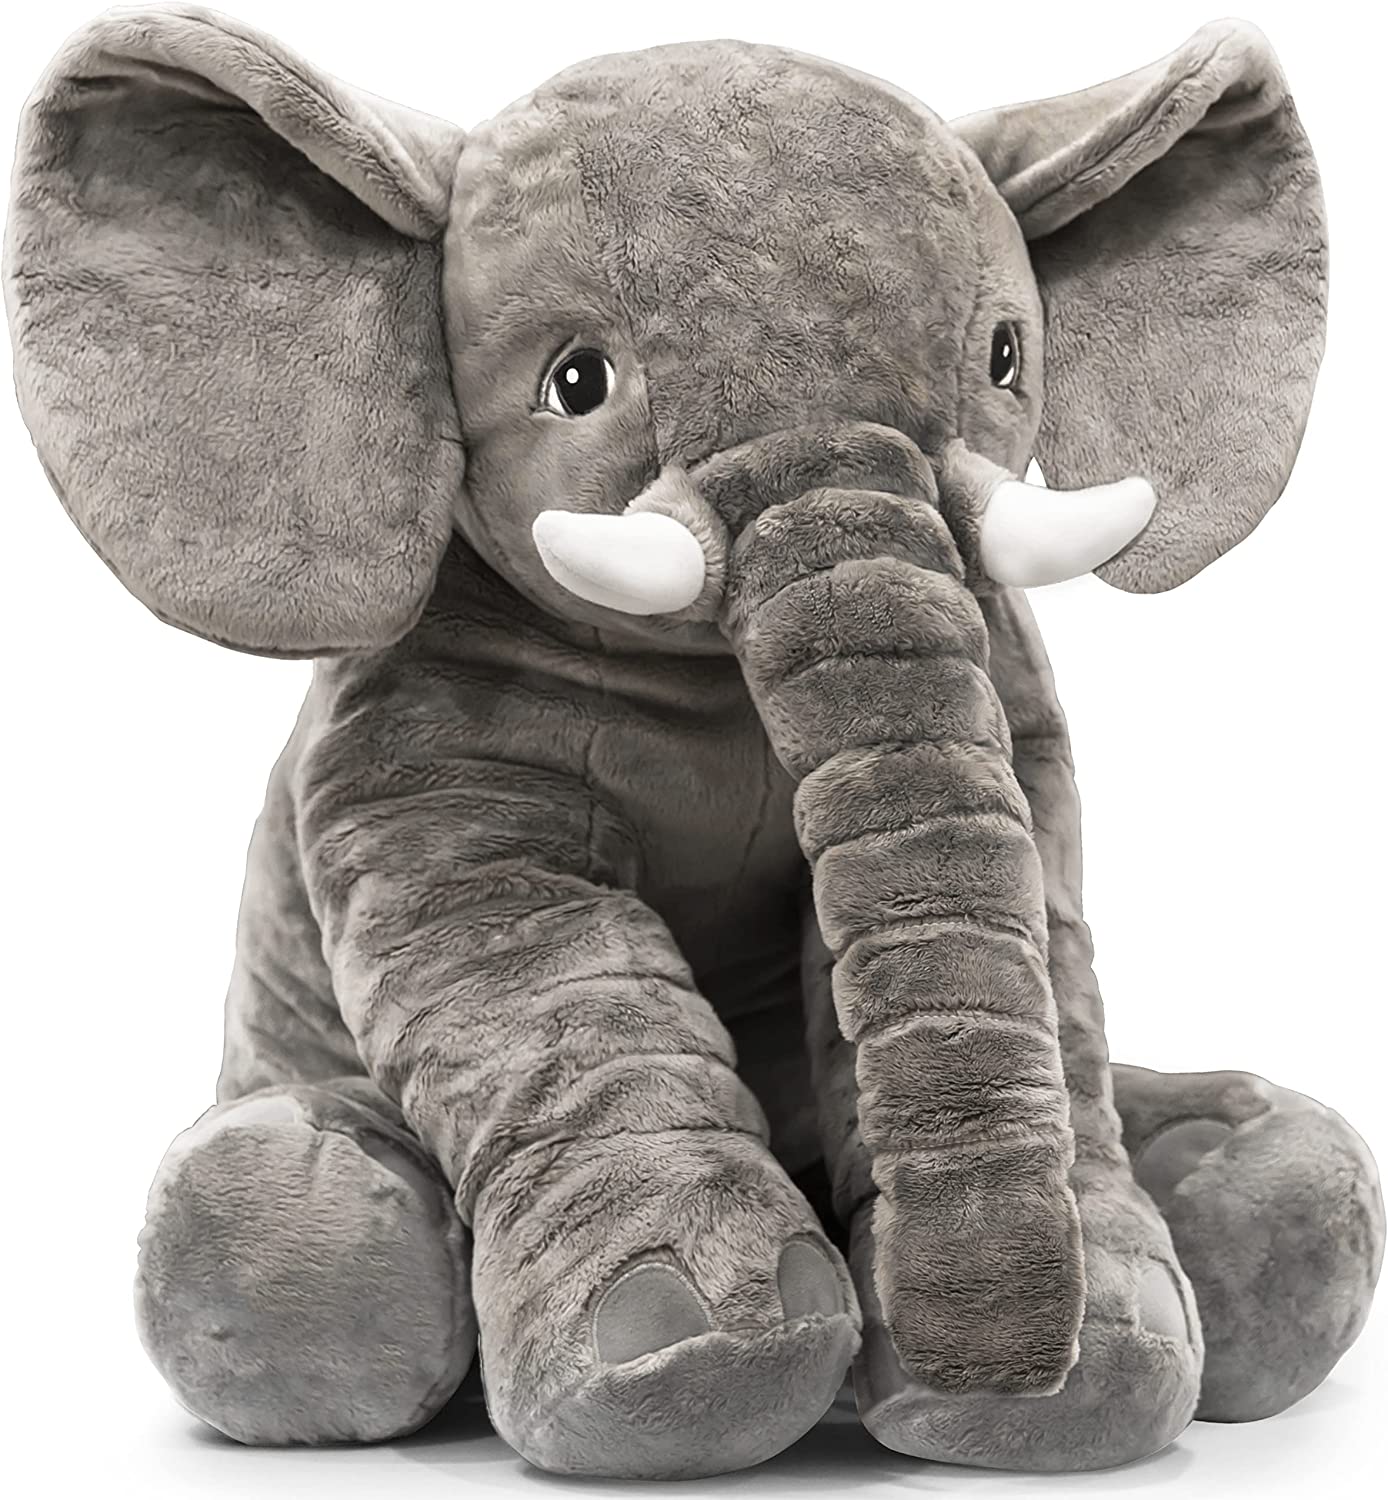 Homily Breathable Elephant Stuffed Animal, 24-Inch